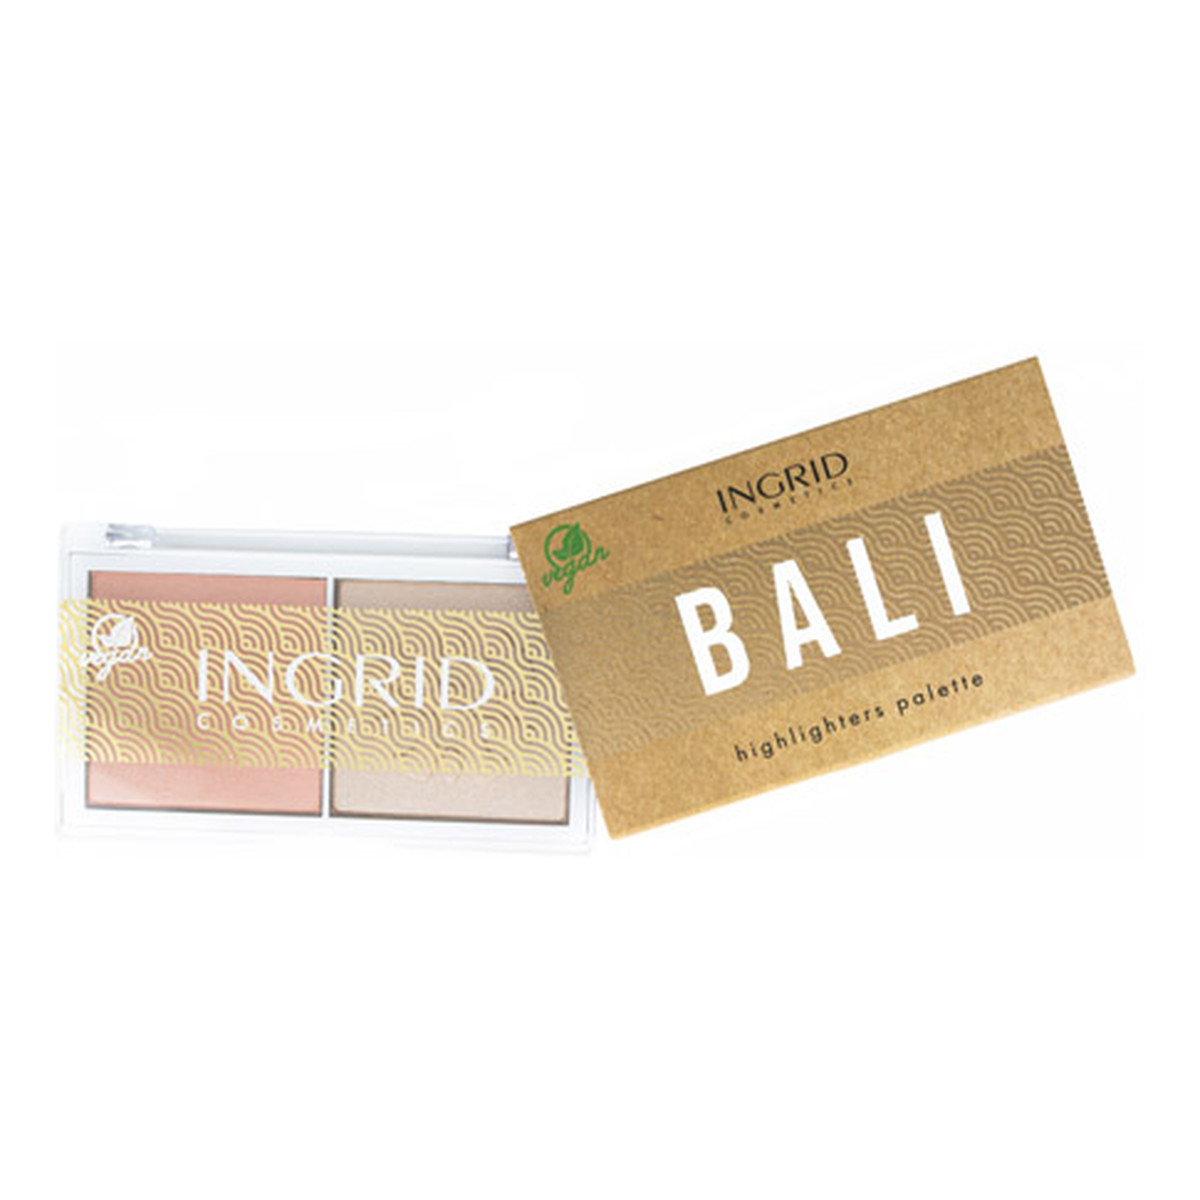 Ingrid Bali Highlighting Palette paleta rozświetlaczy 20g